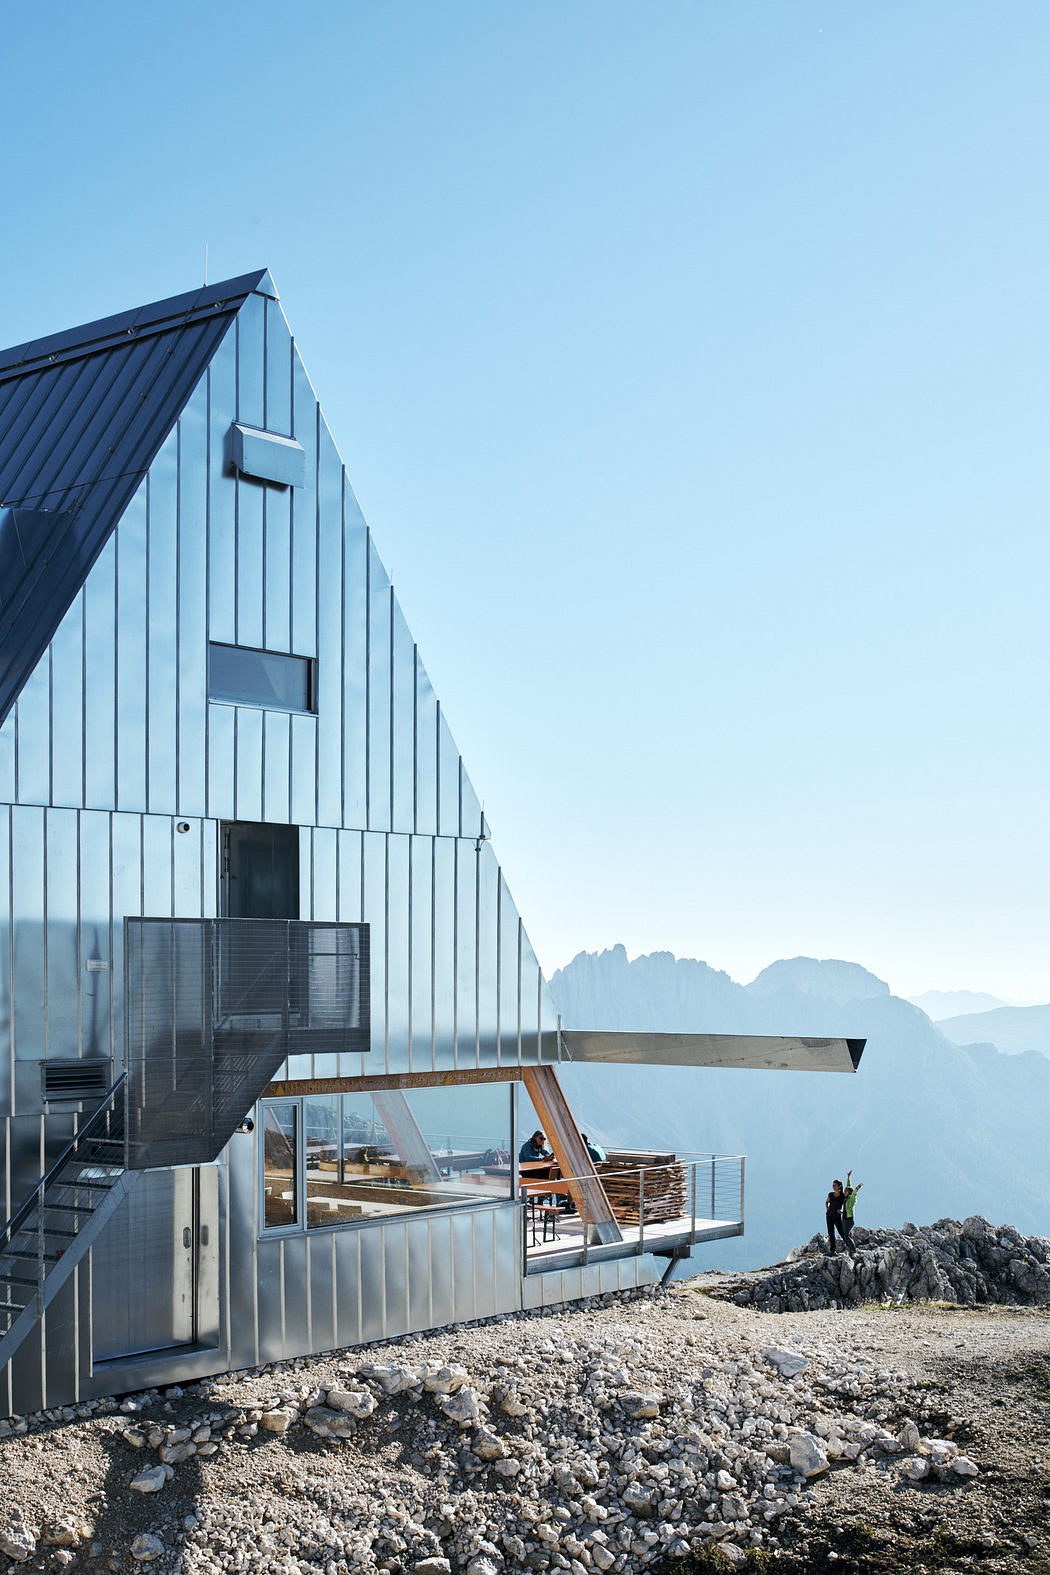 Futuristic alpine hut with large glass facade on mountain peak.